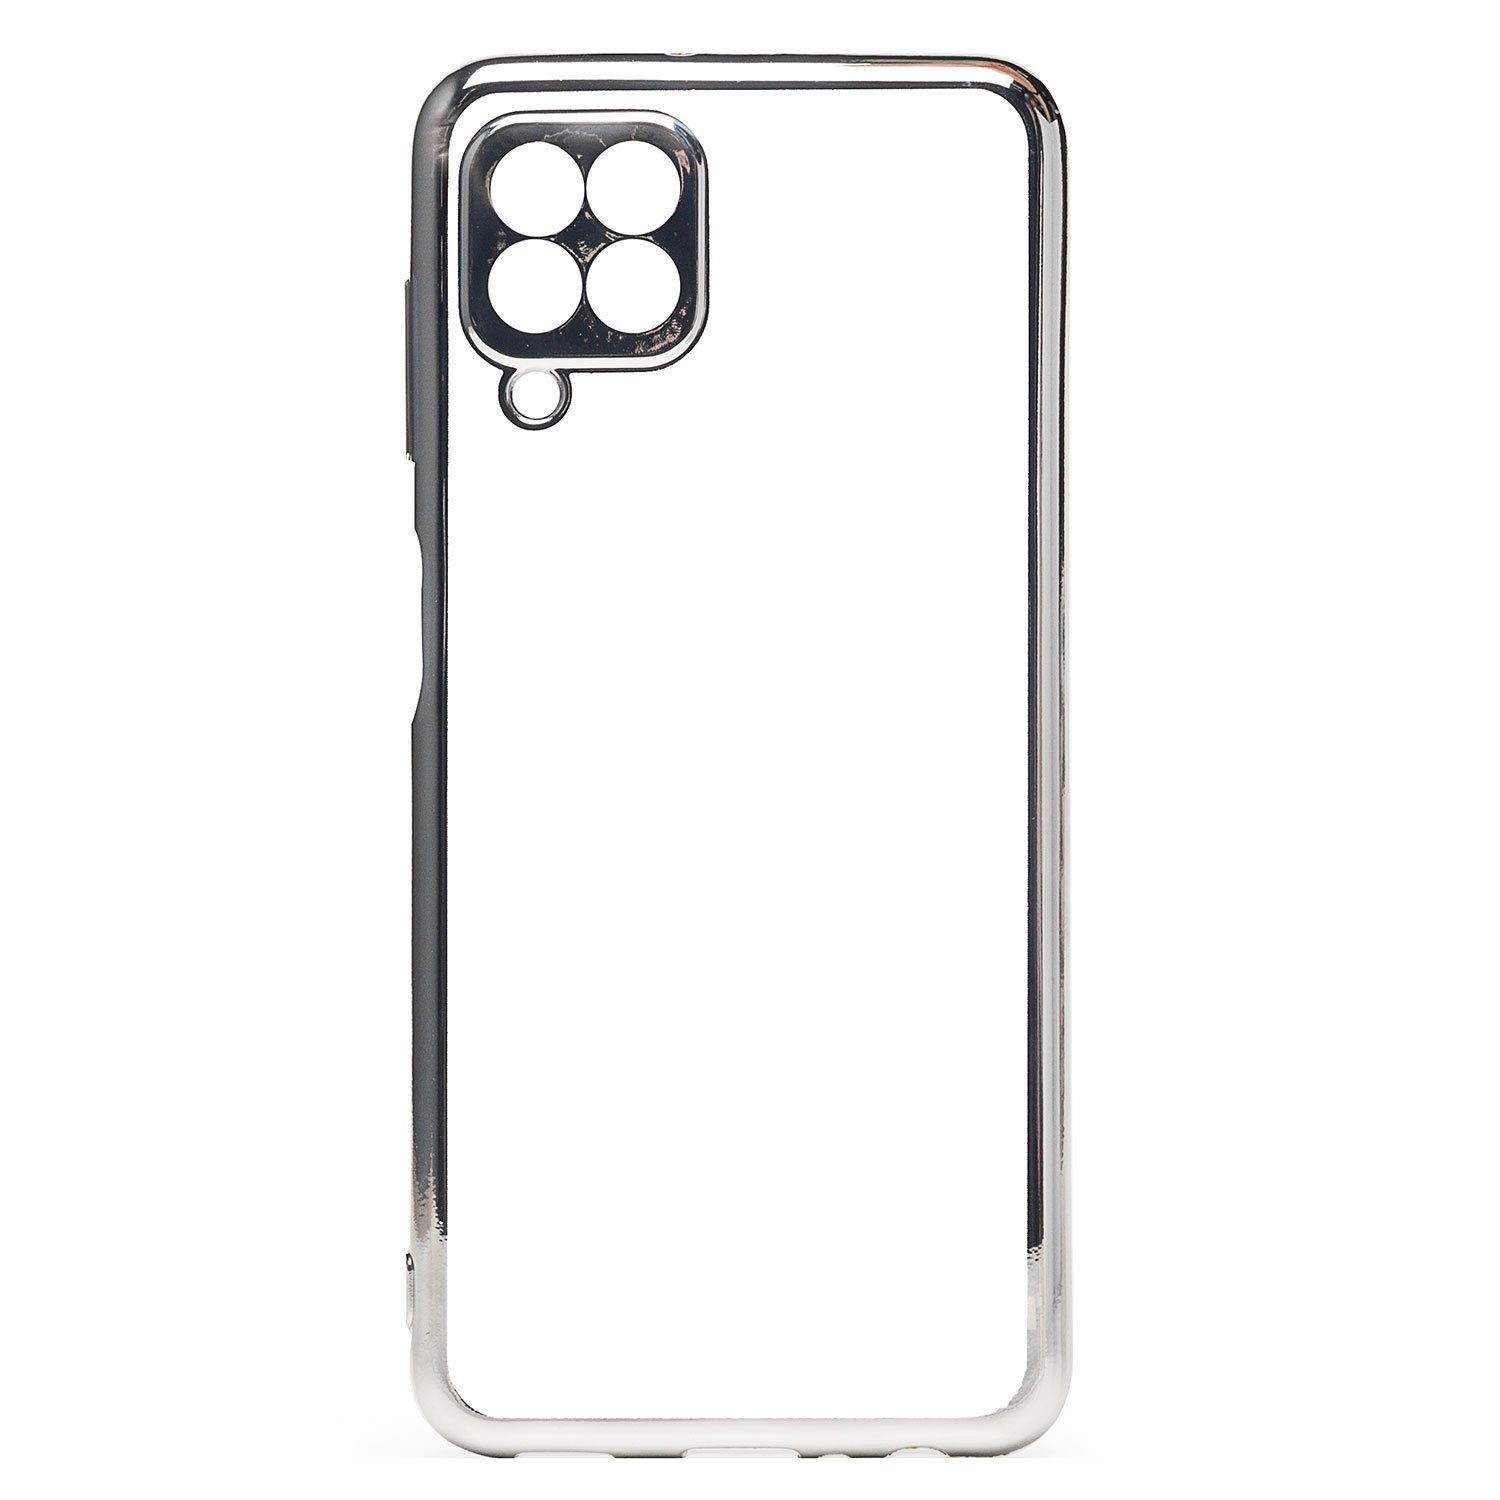   E2E4 Чехол-накладка Activ Pilot для смартфона Samsung SM-M325 Galaxy M32 Global, силикон, серебристый (133499)